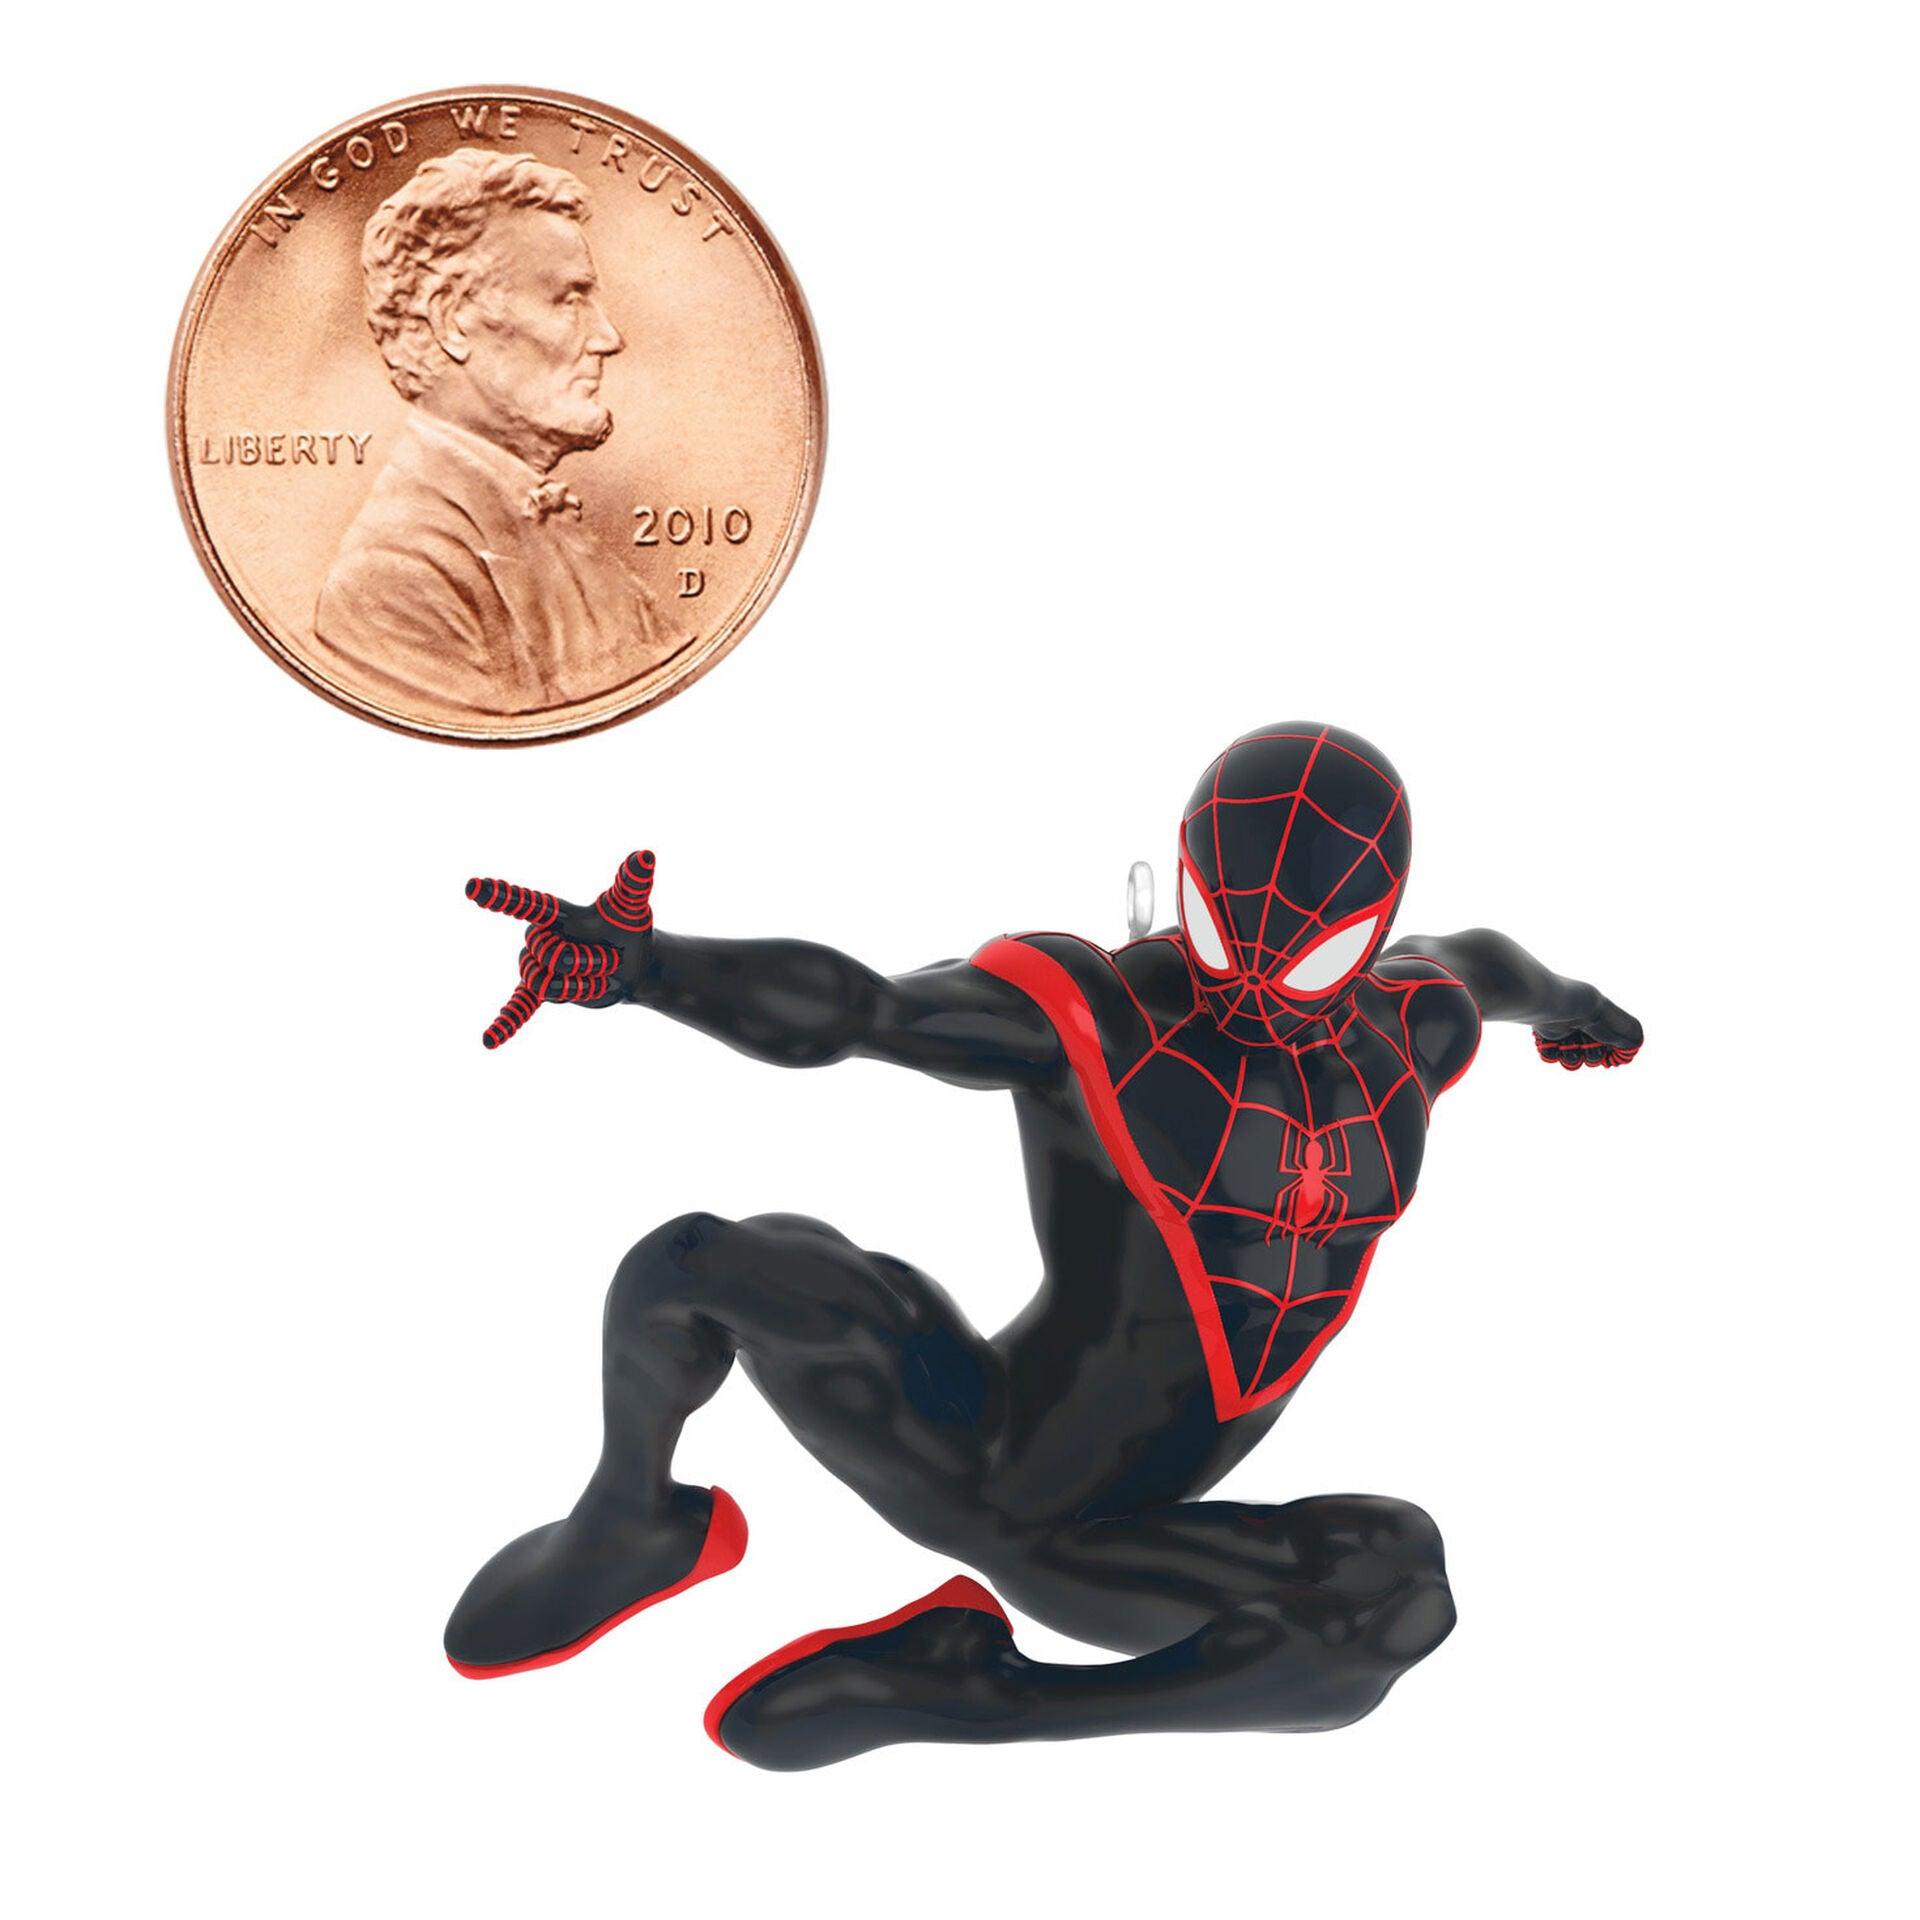 Shop Marvel's Spider-Man collection